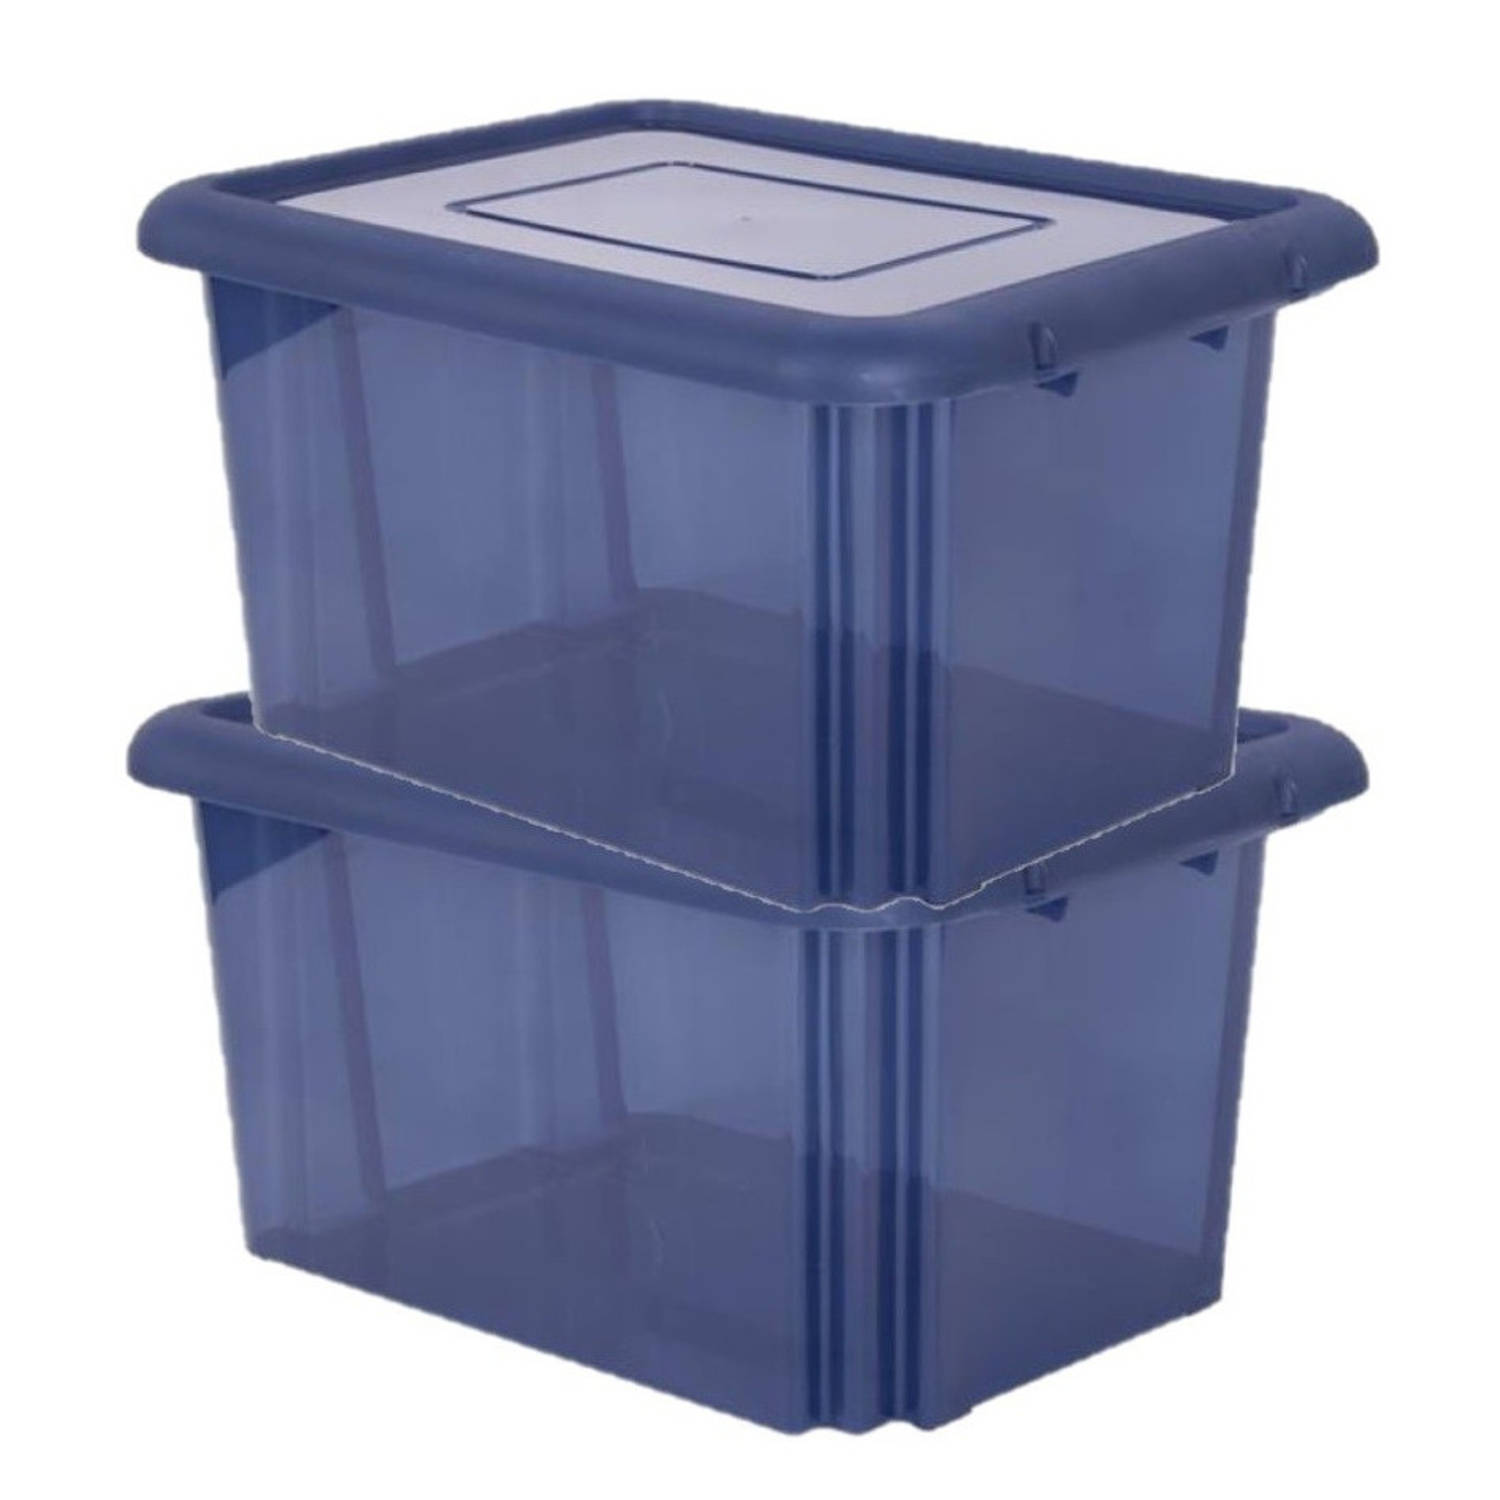 2x stuks kunststof opbergboxen/opbergdozen donkerblauw transparant L58 x B44 x H31 cm stapelbaar - Opbergbox